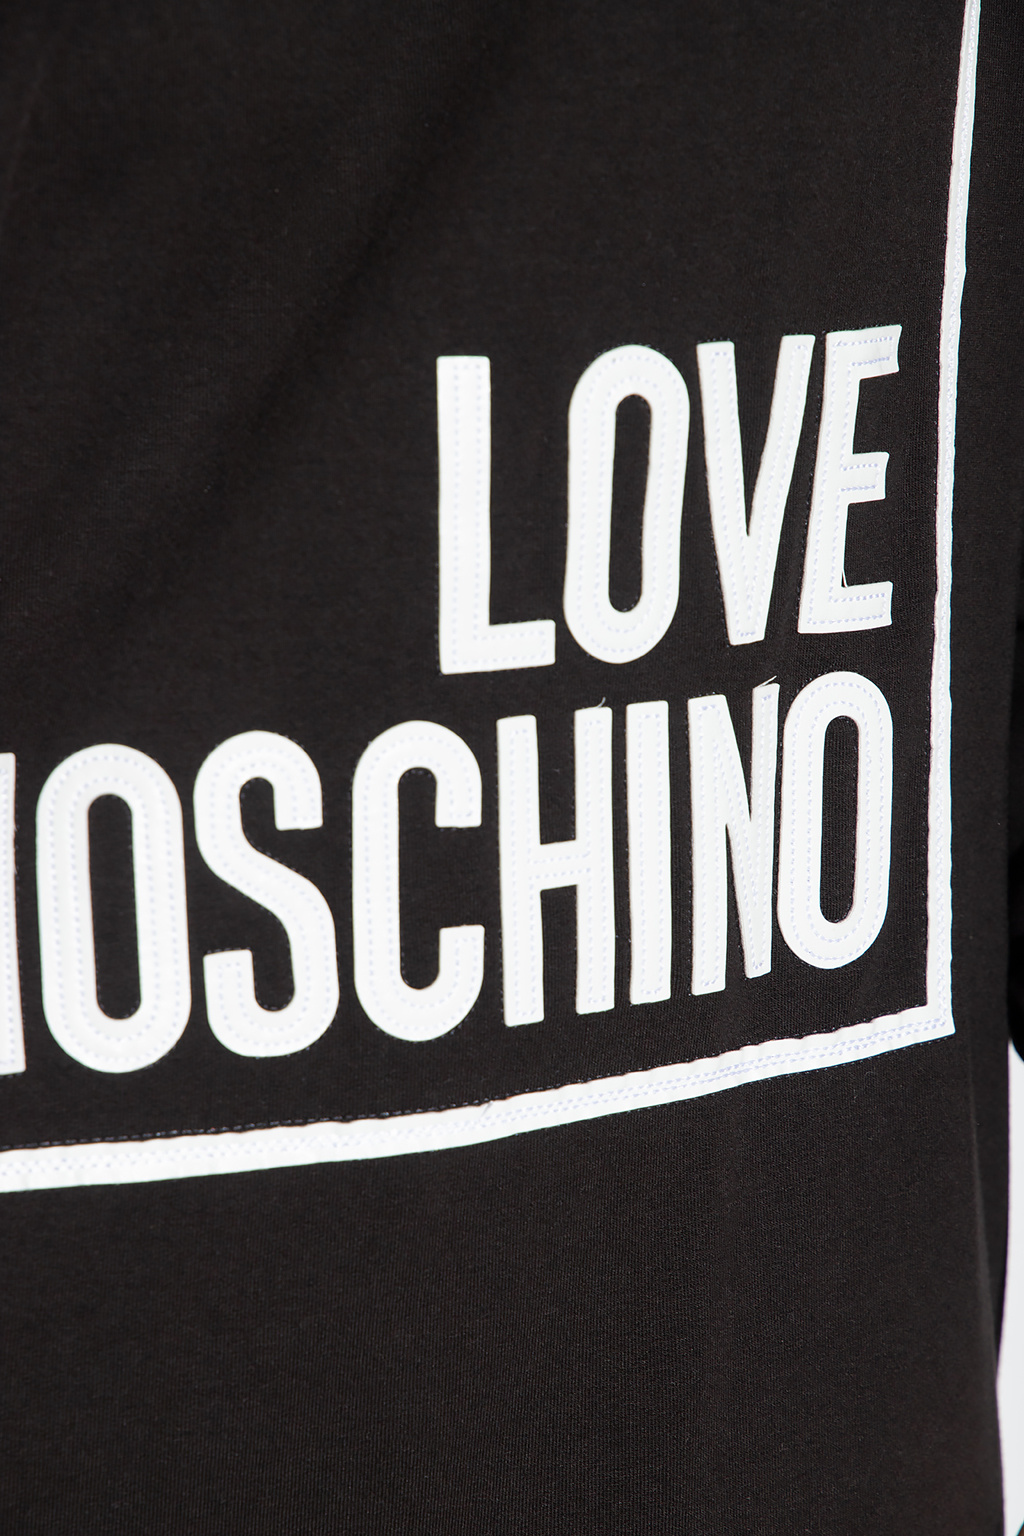 Love Moschino Billieblush U12726 Dress